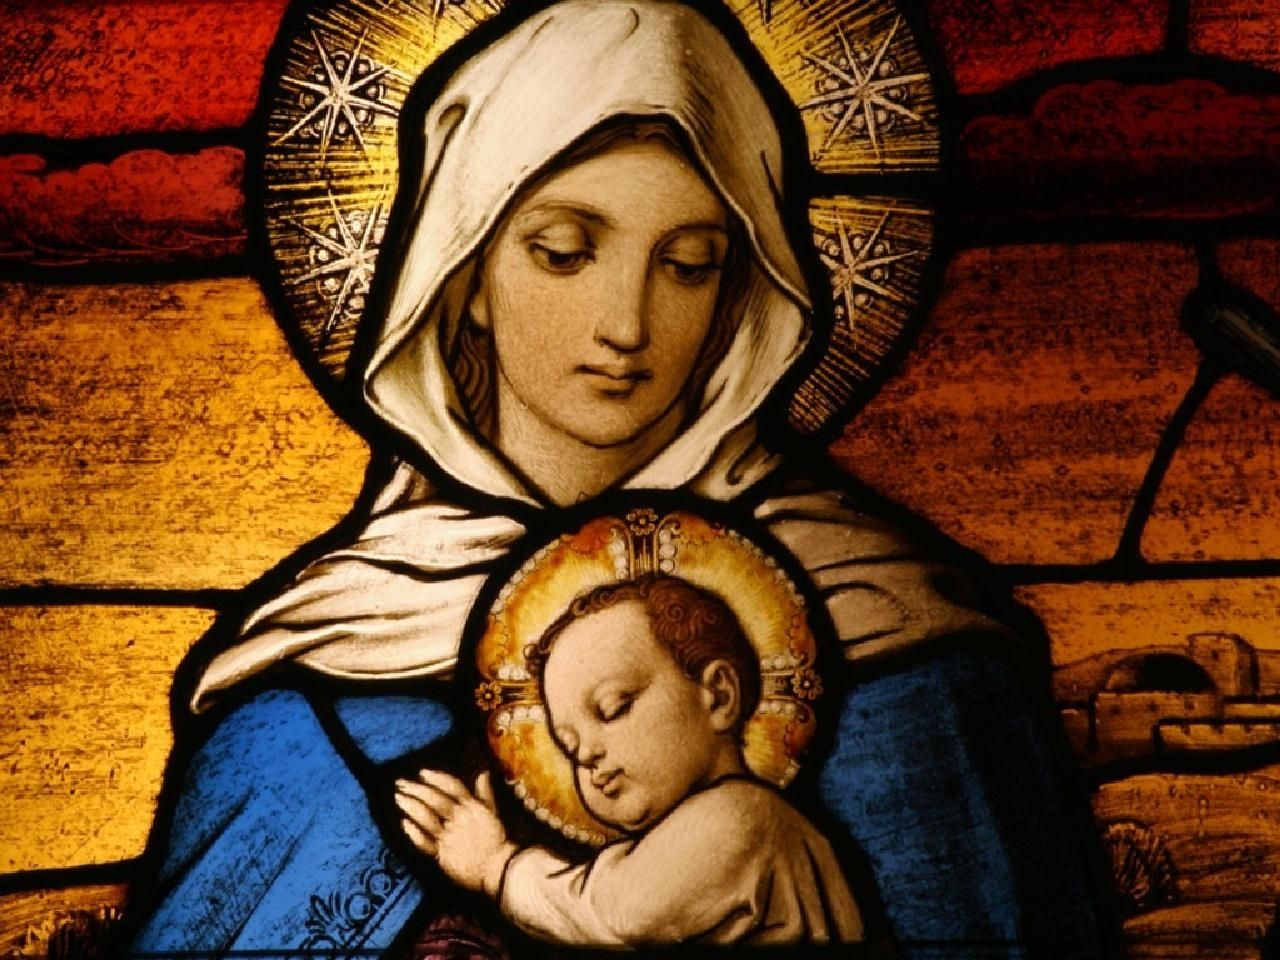 200+ Free Baby Jesus & Jesus Images - Pixabay